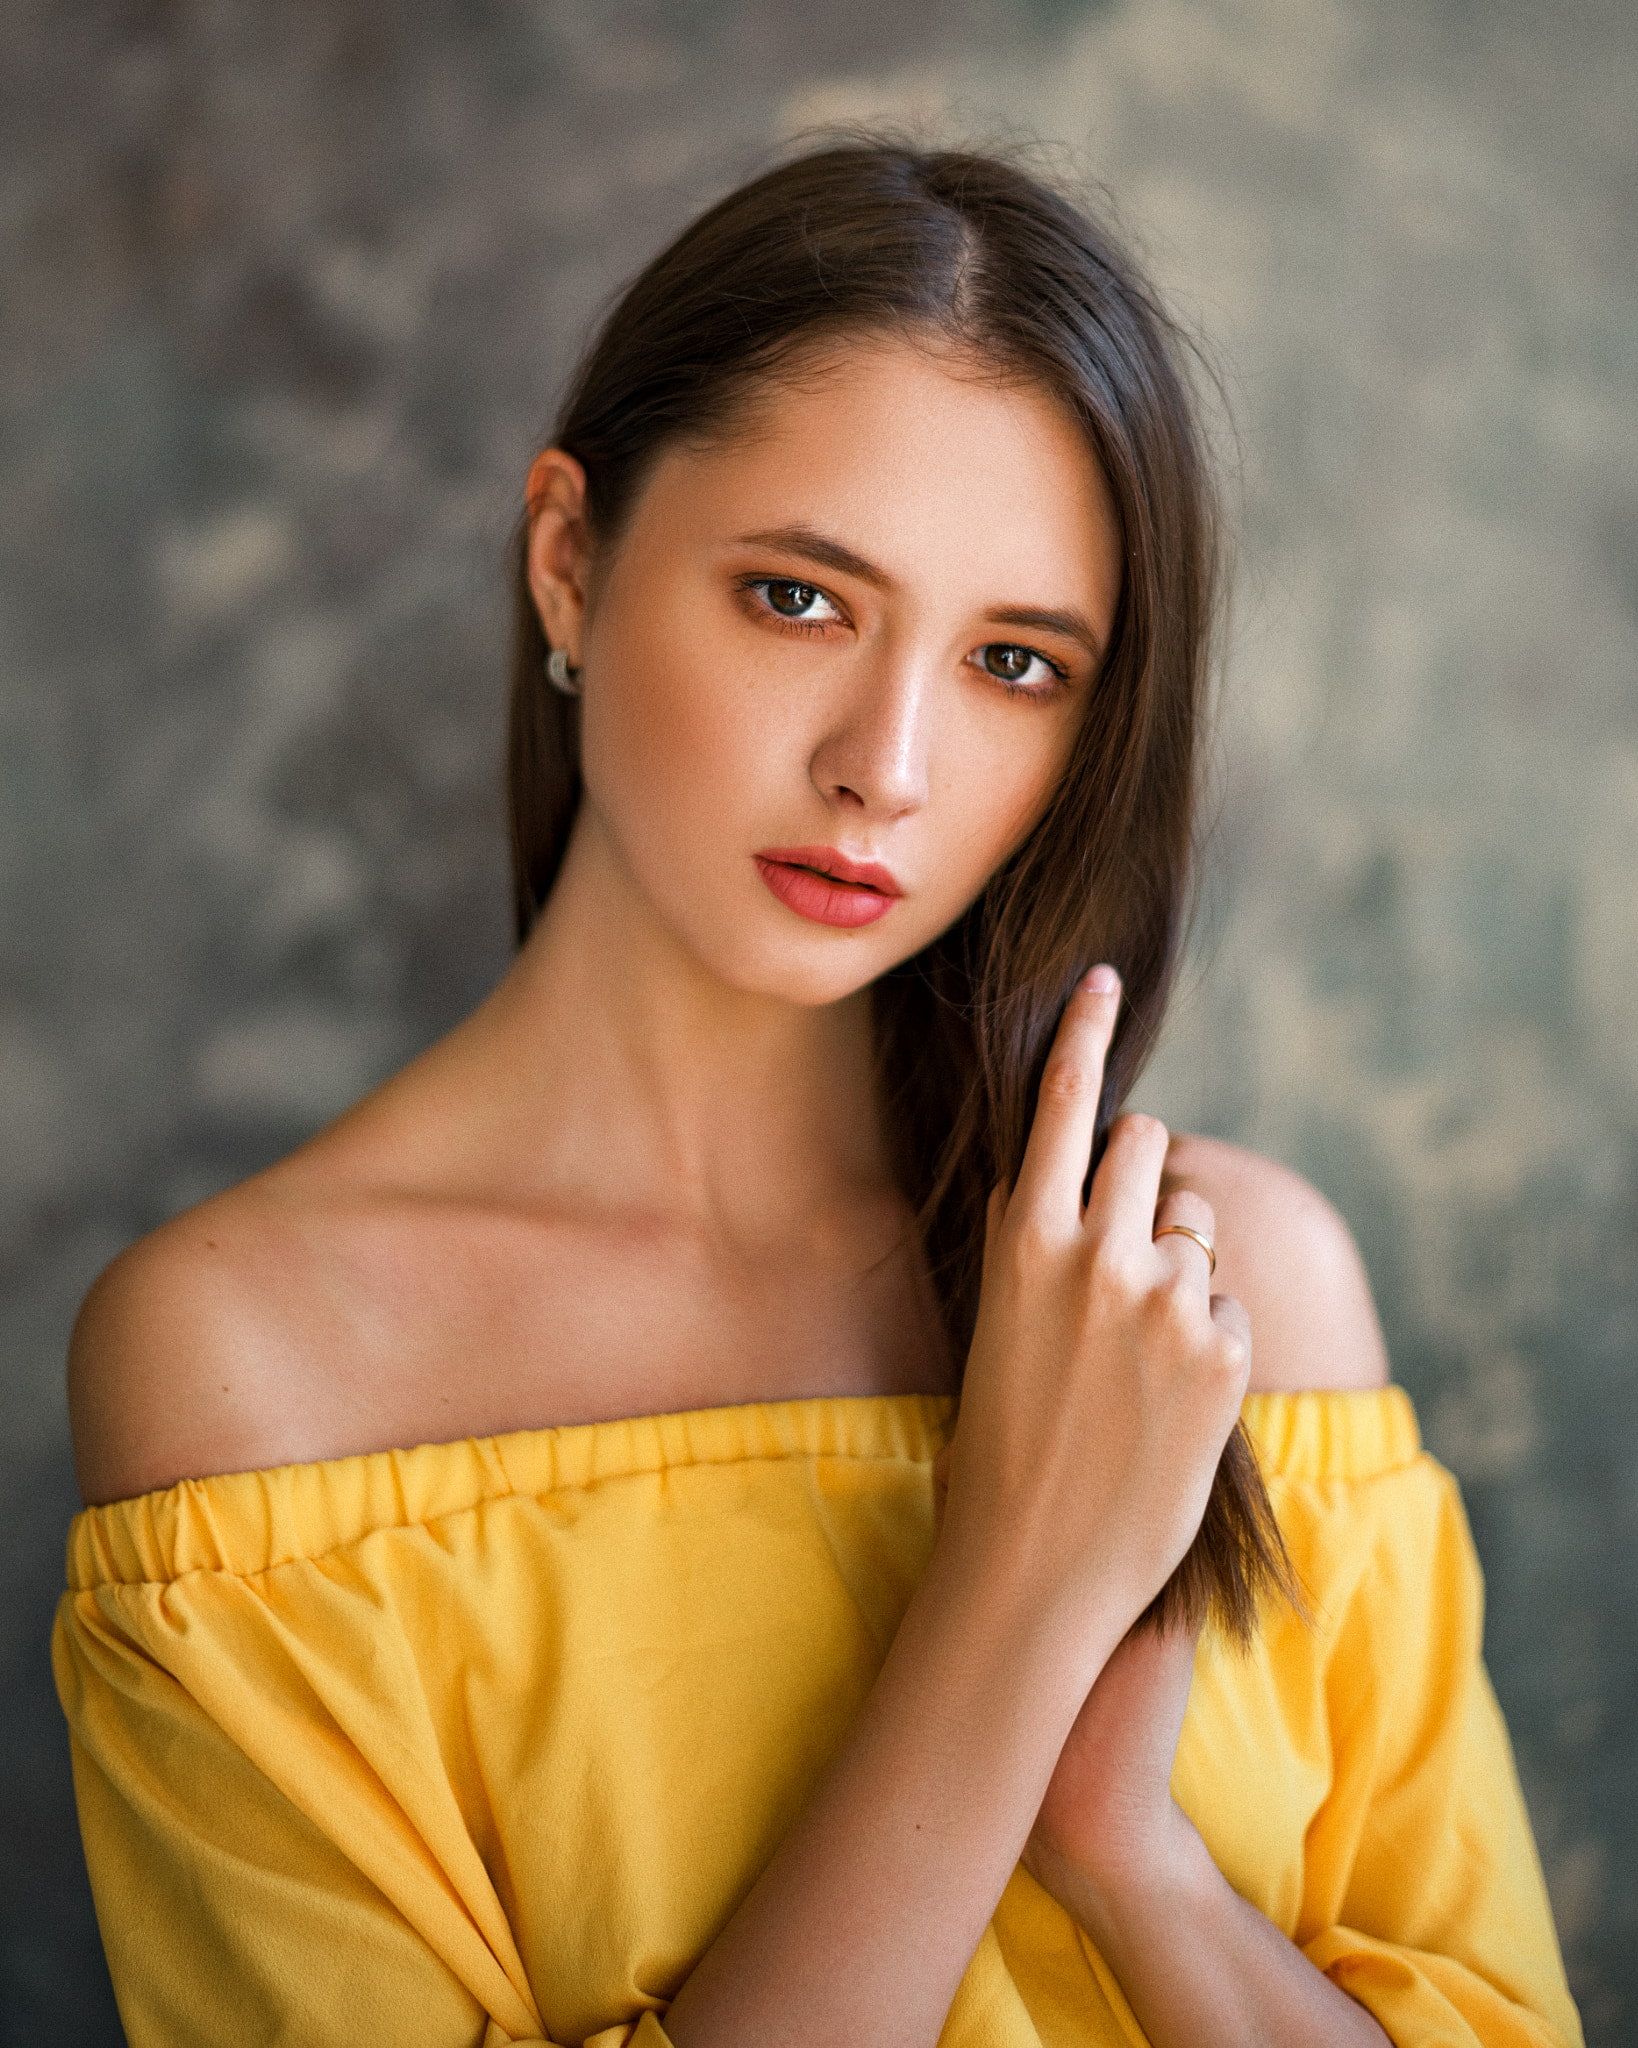 Disha Shemetova Model Portrait Wallpapers